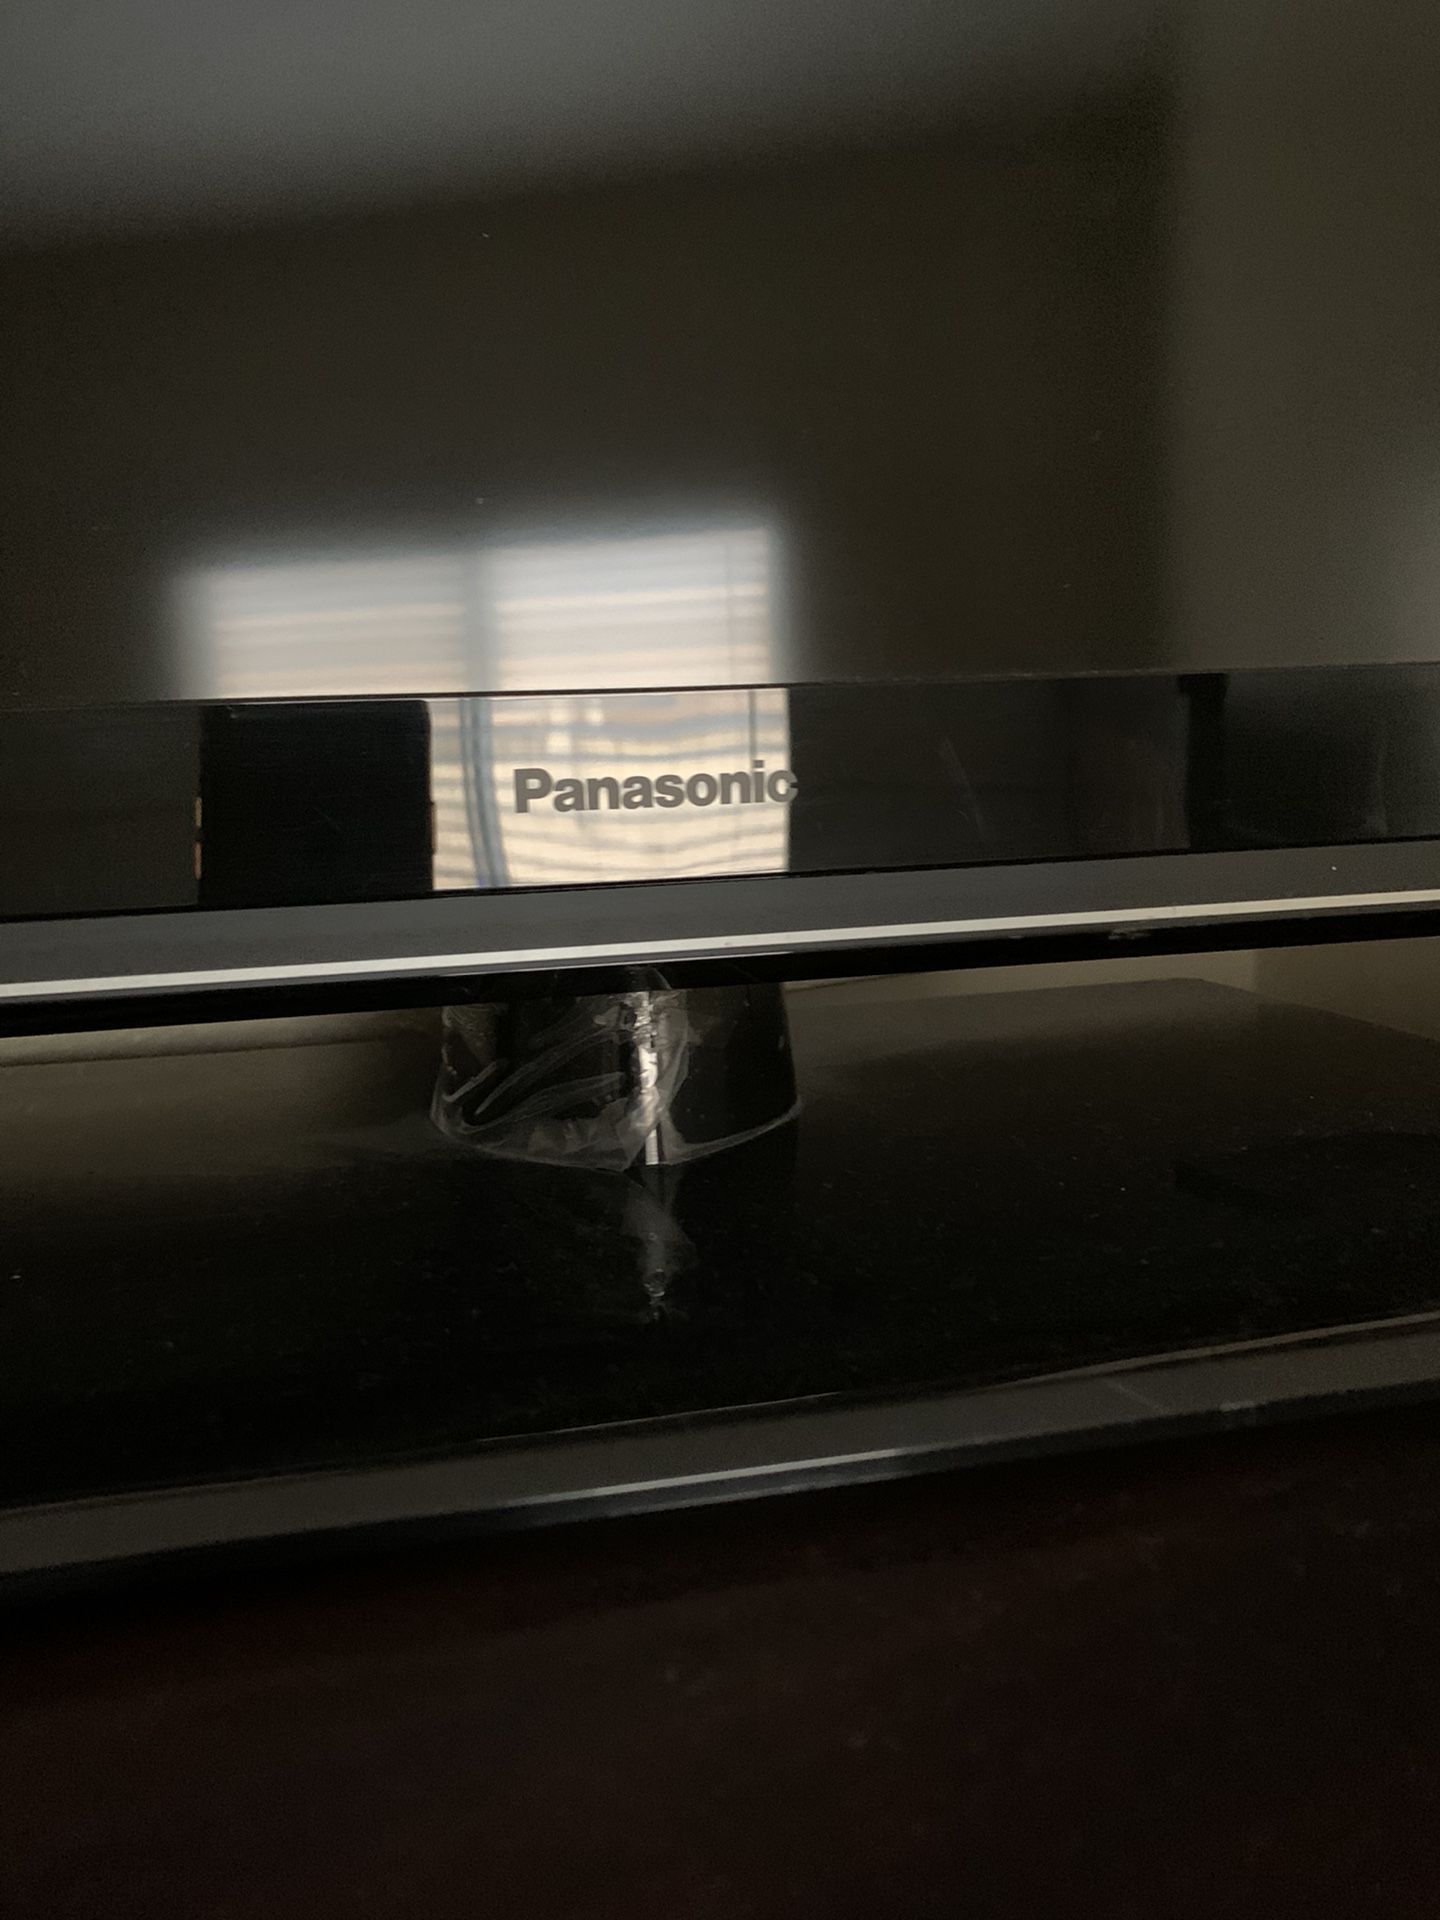 Panasonic flat screen